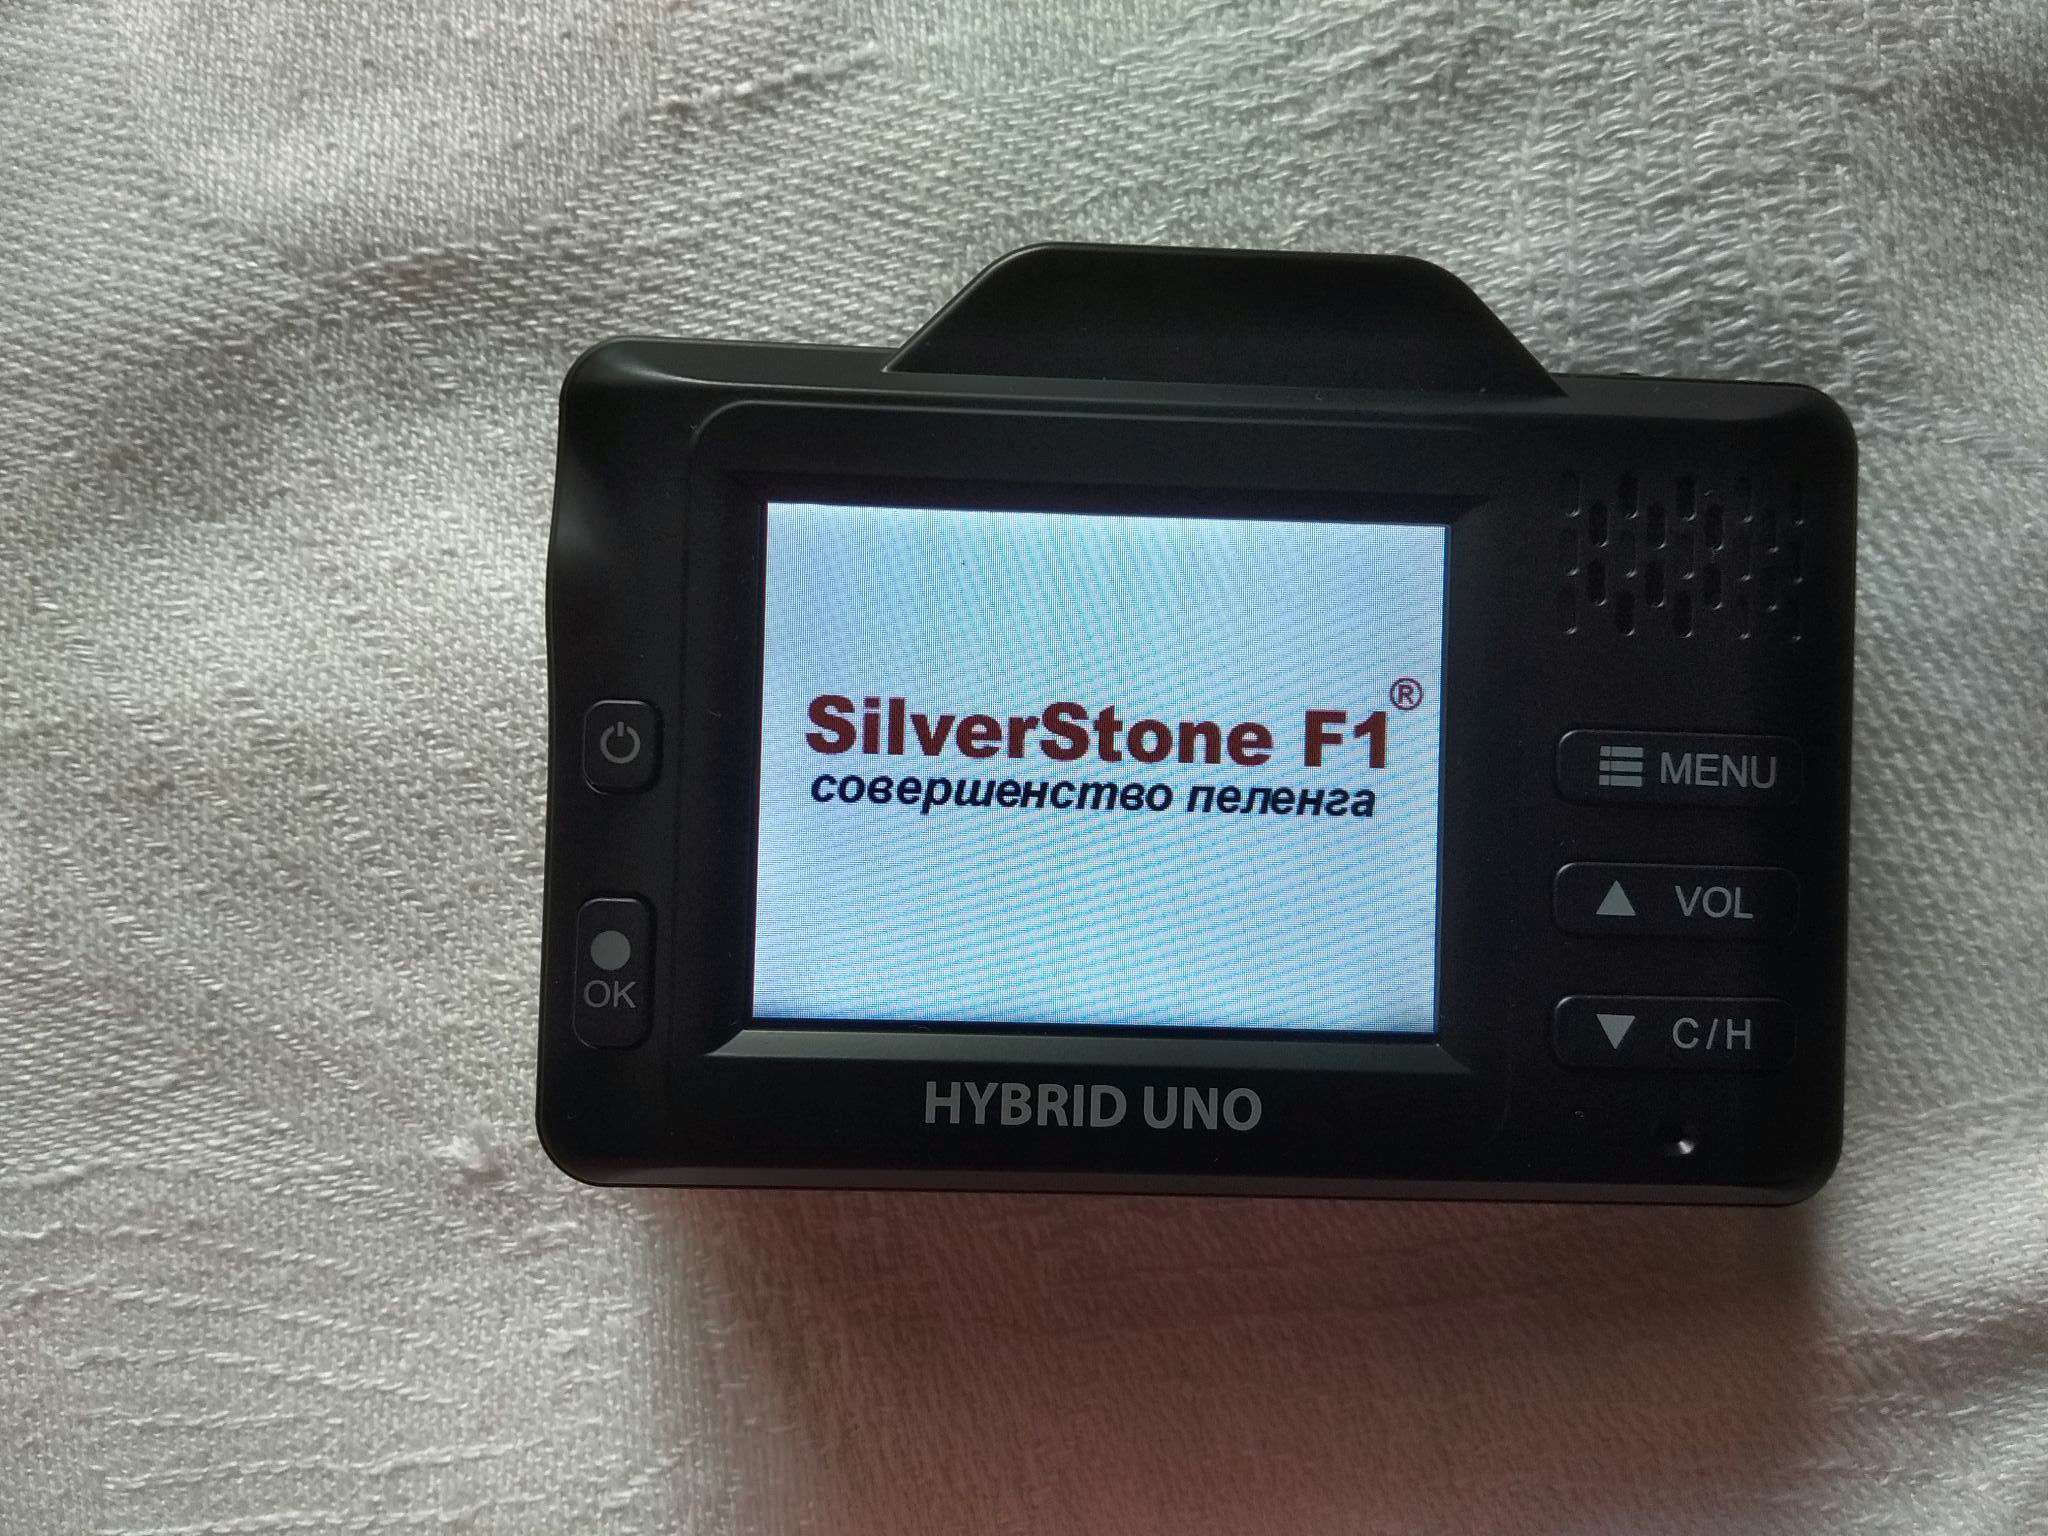 Silverstone hybrid uno s